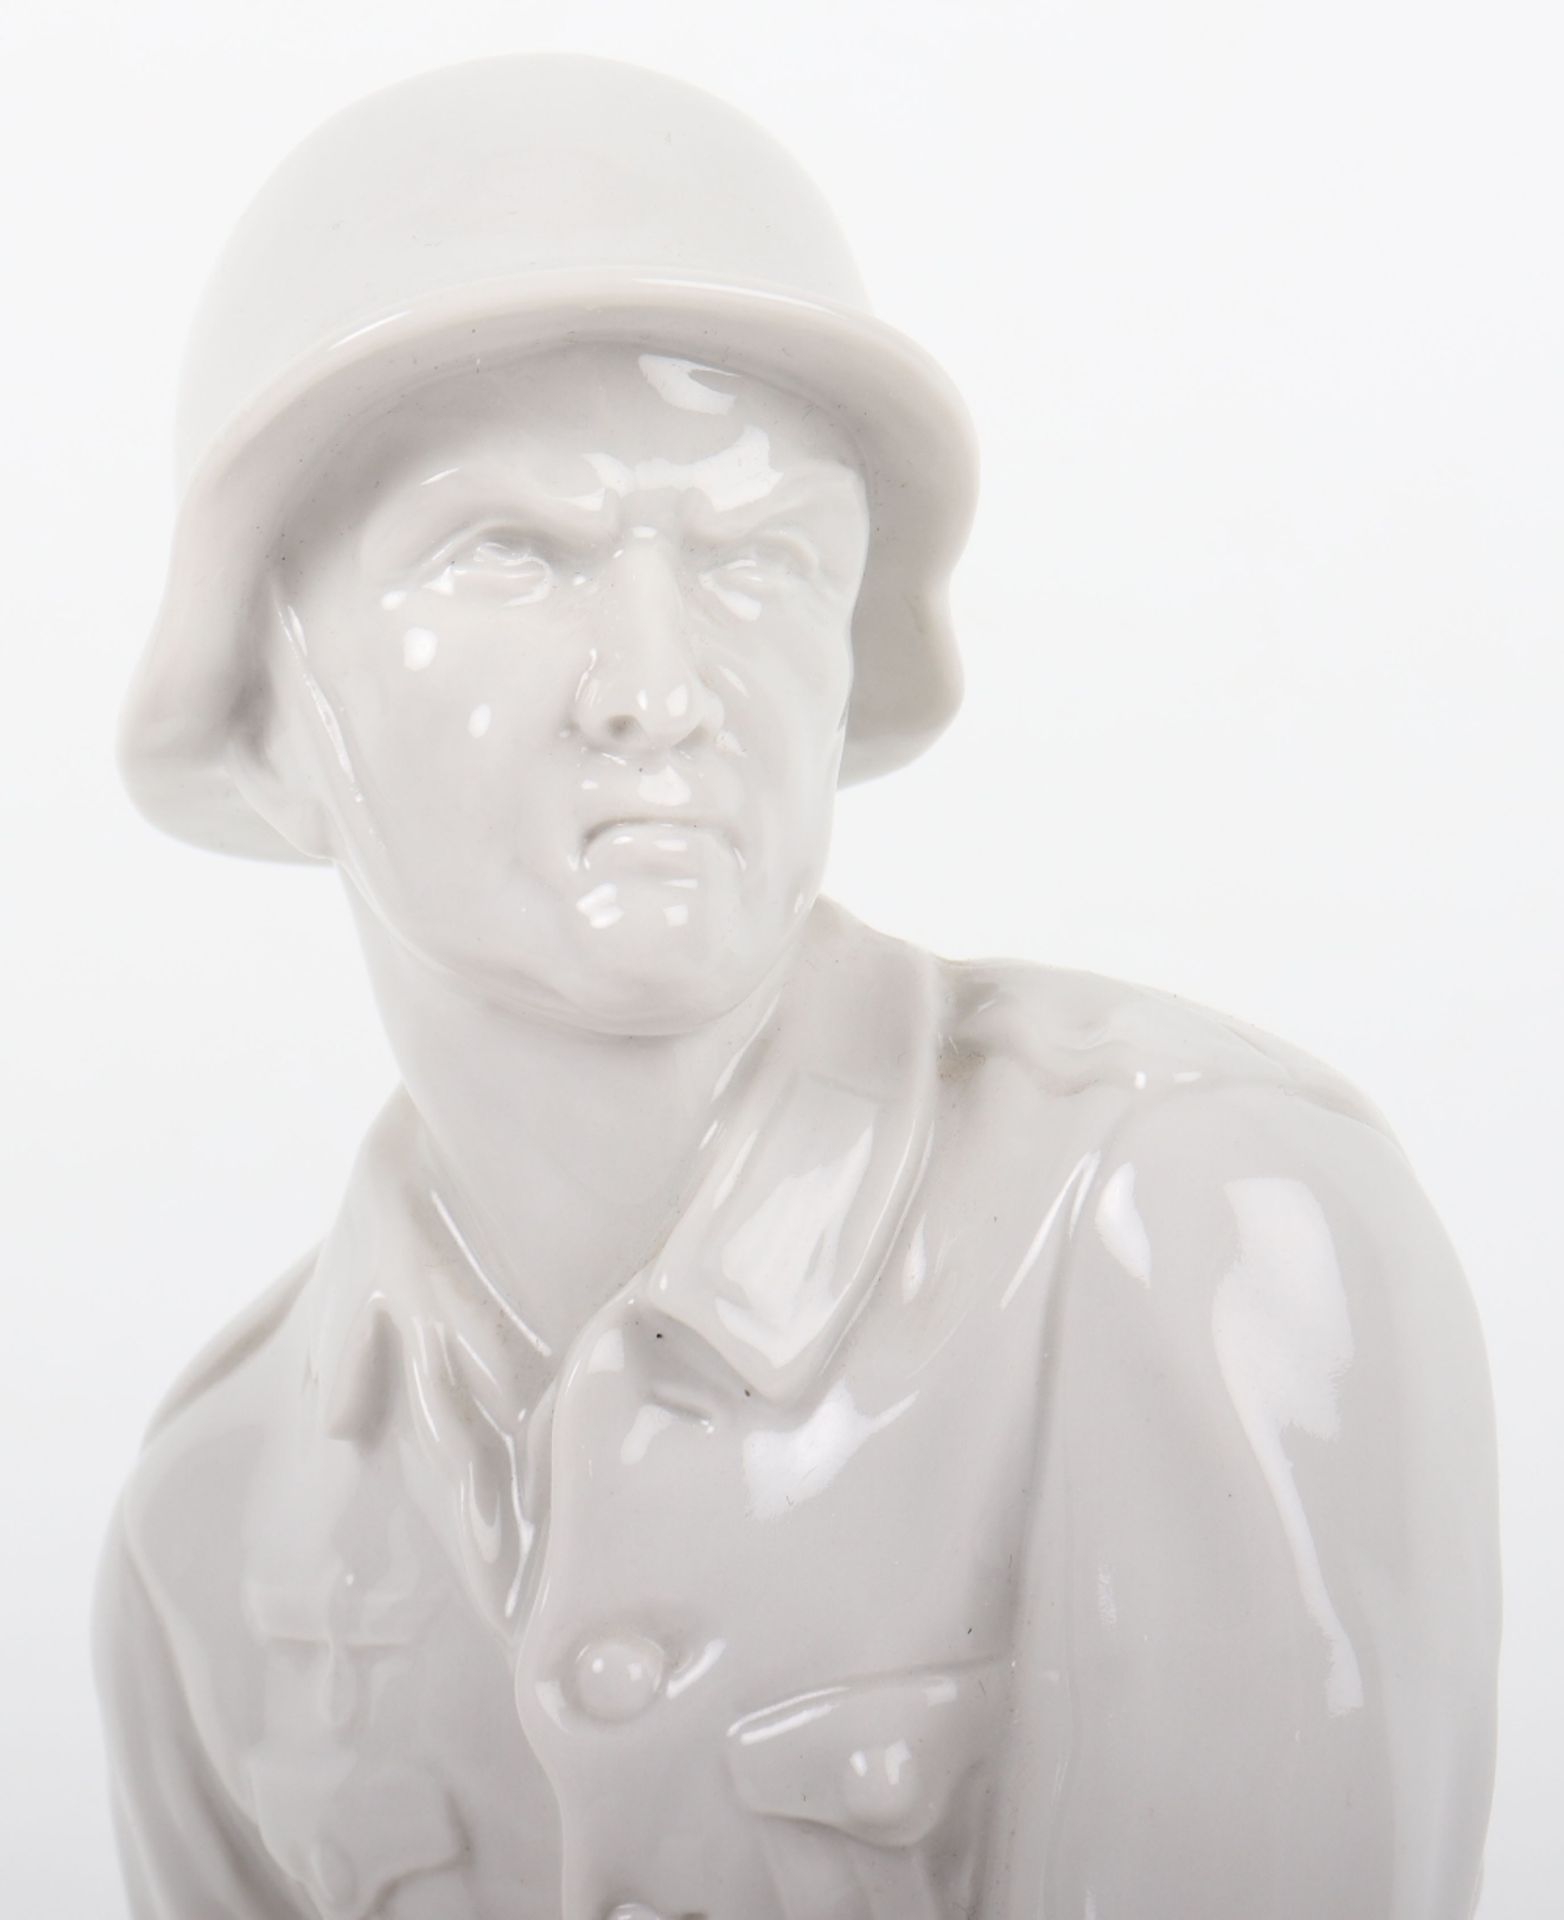 WW2 German Porcelain Statue of a Grenade Thrower in Combat by Karl Ens - Bild 2 aus 11